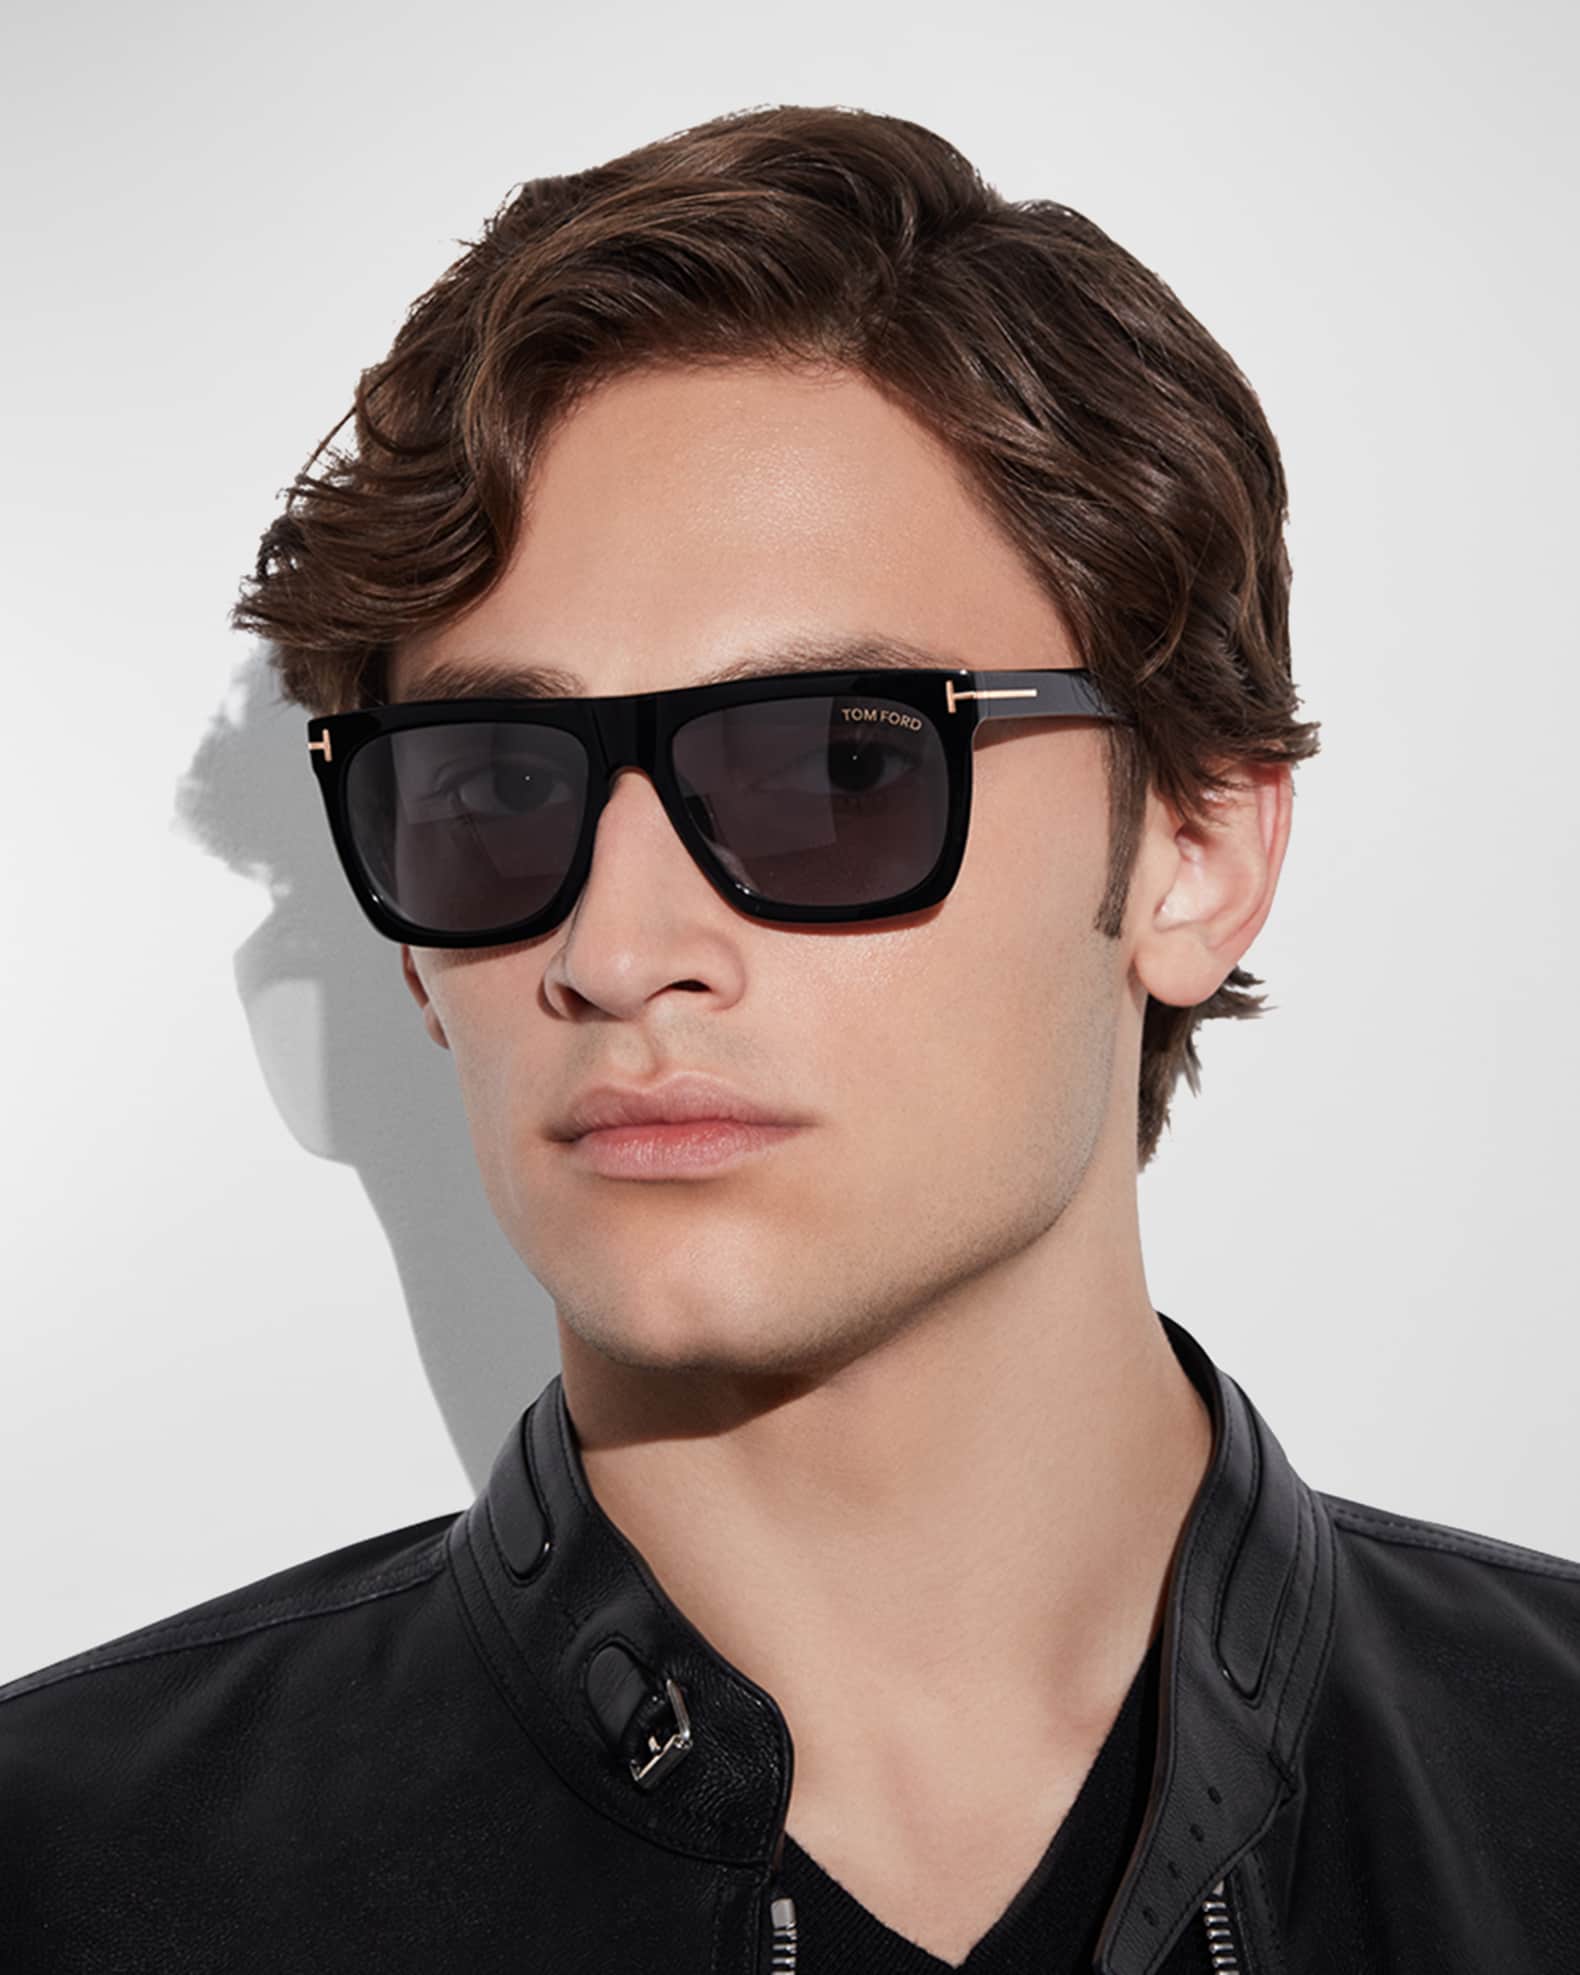 TOM FORD Morgan Thick Square Acetate Sunglasses, Black/Blue | Neiman Marcus